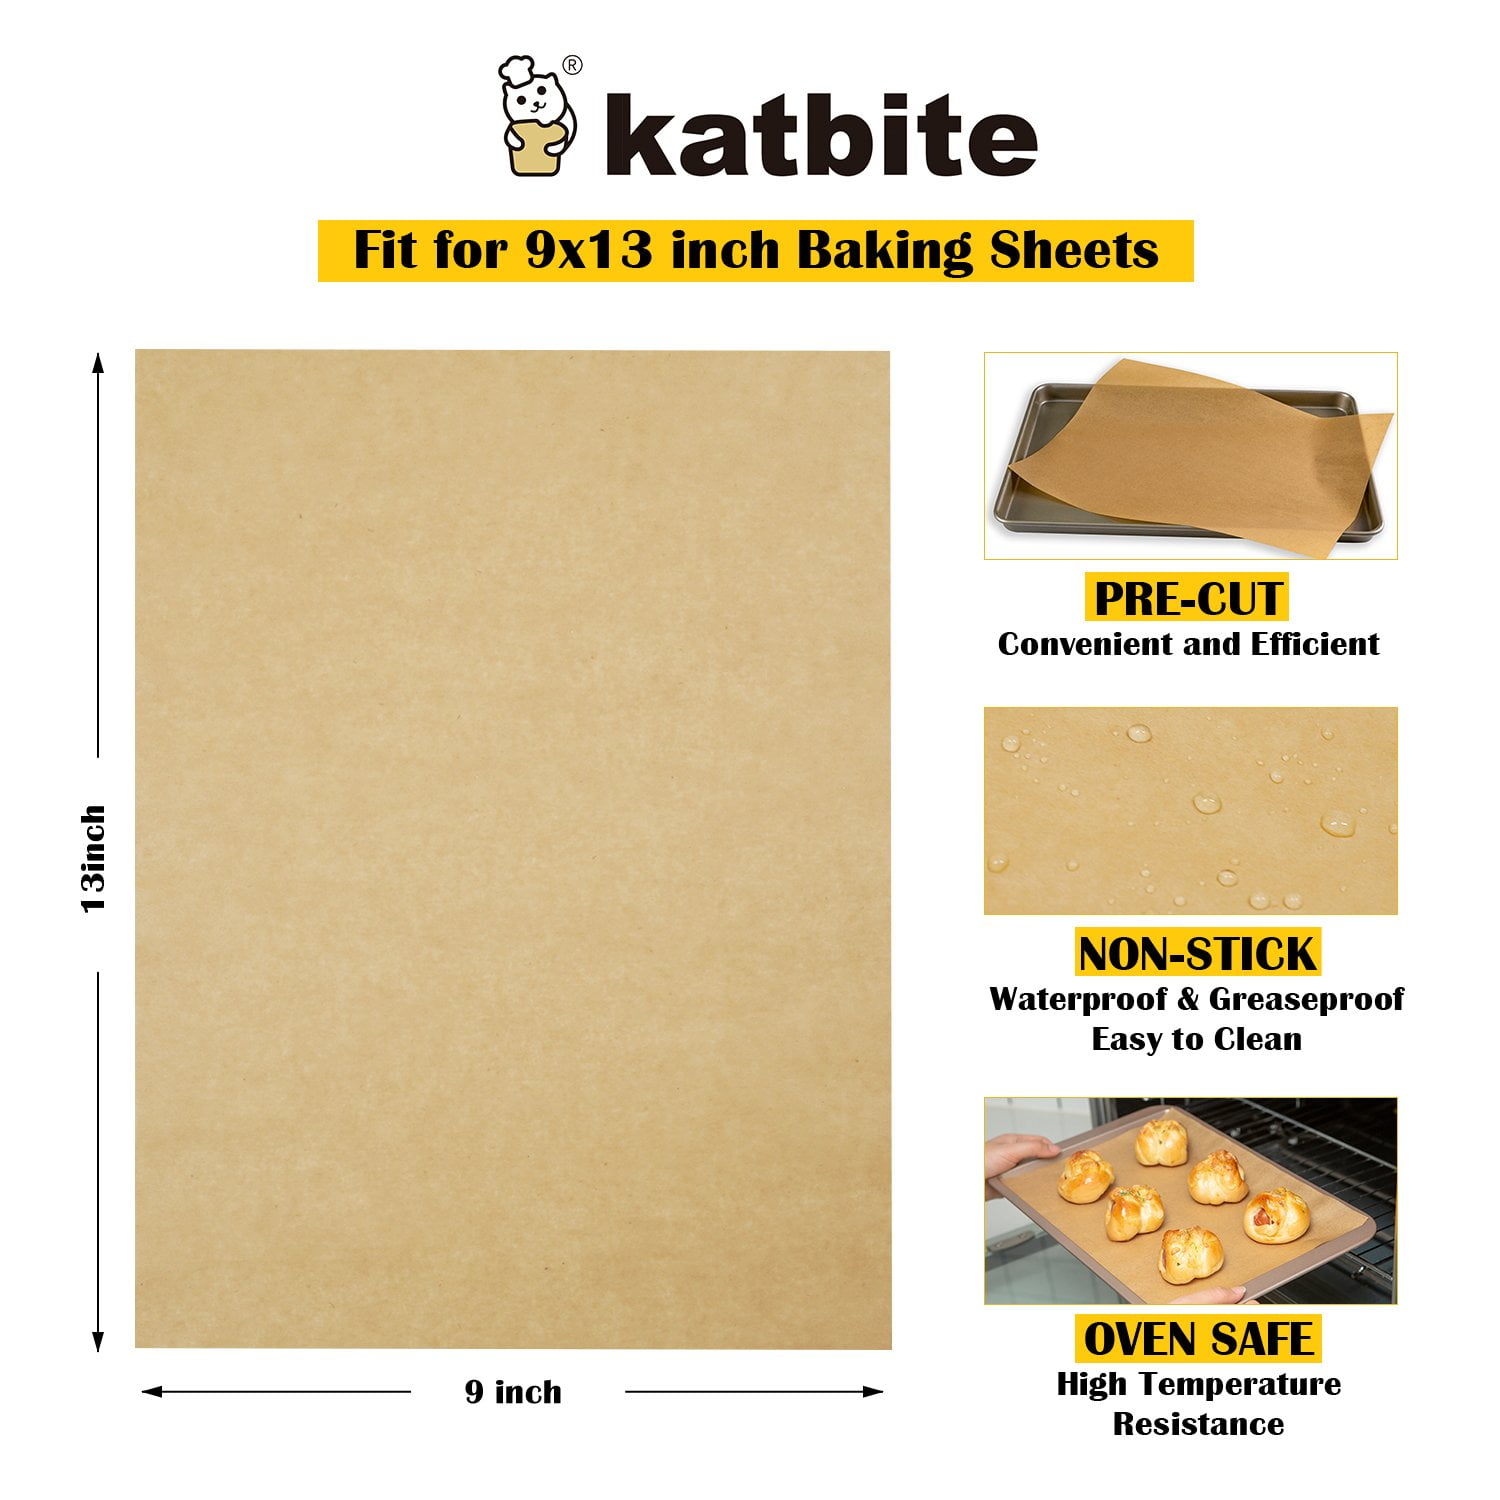 Pre-Cut Printed Parchment Paper Sheets, 9 X 13 By Core Kitchen